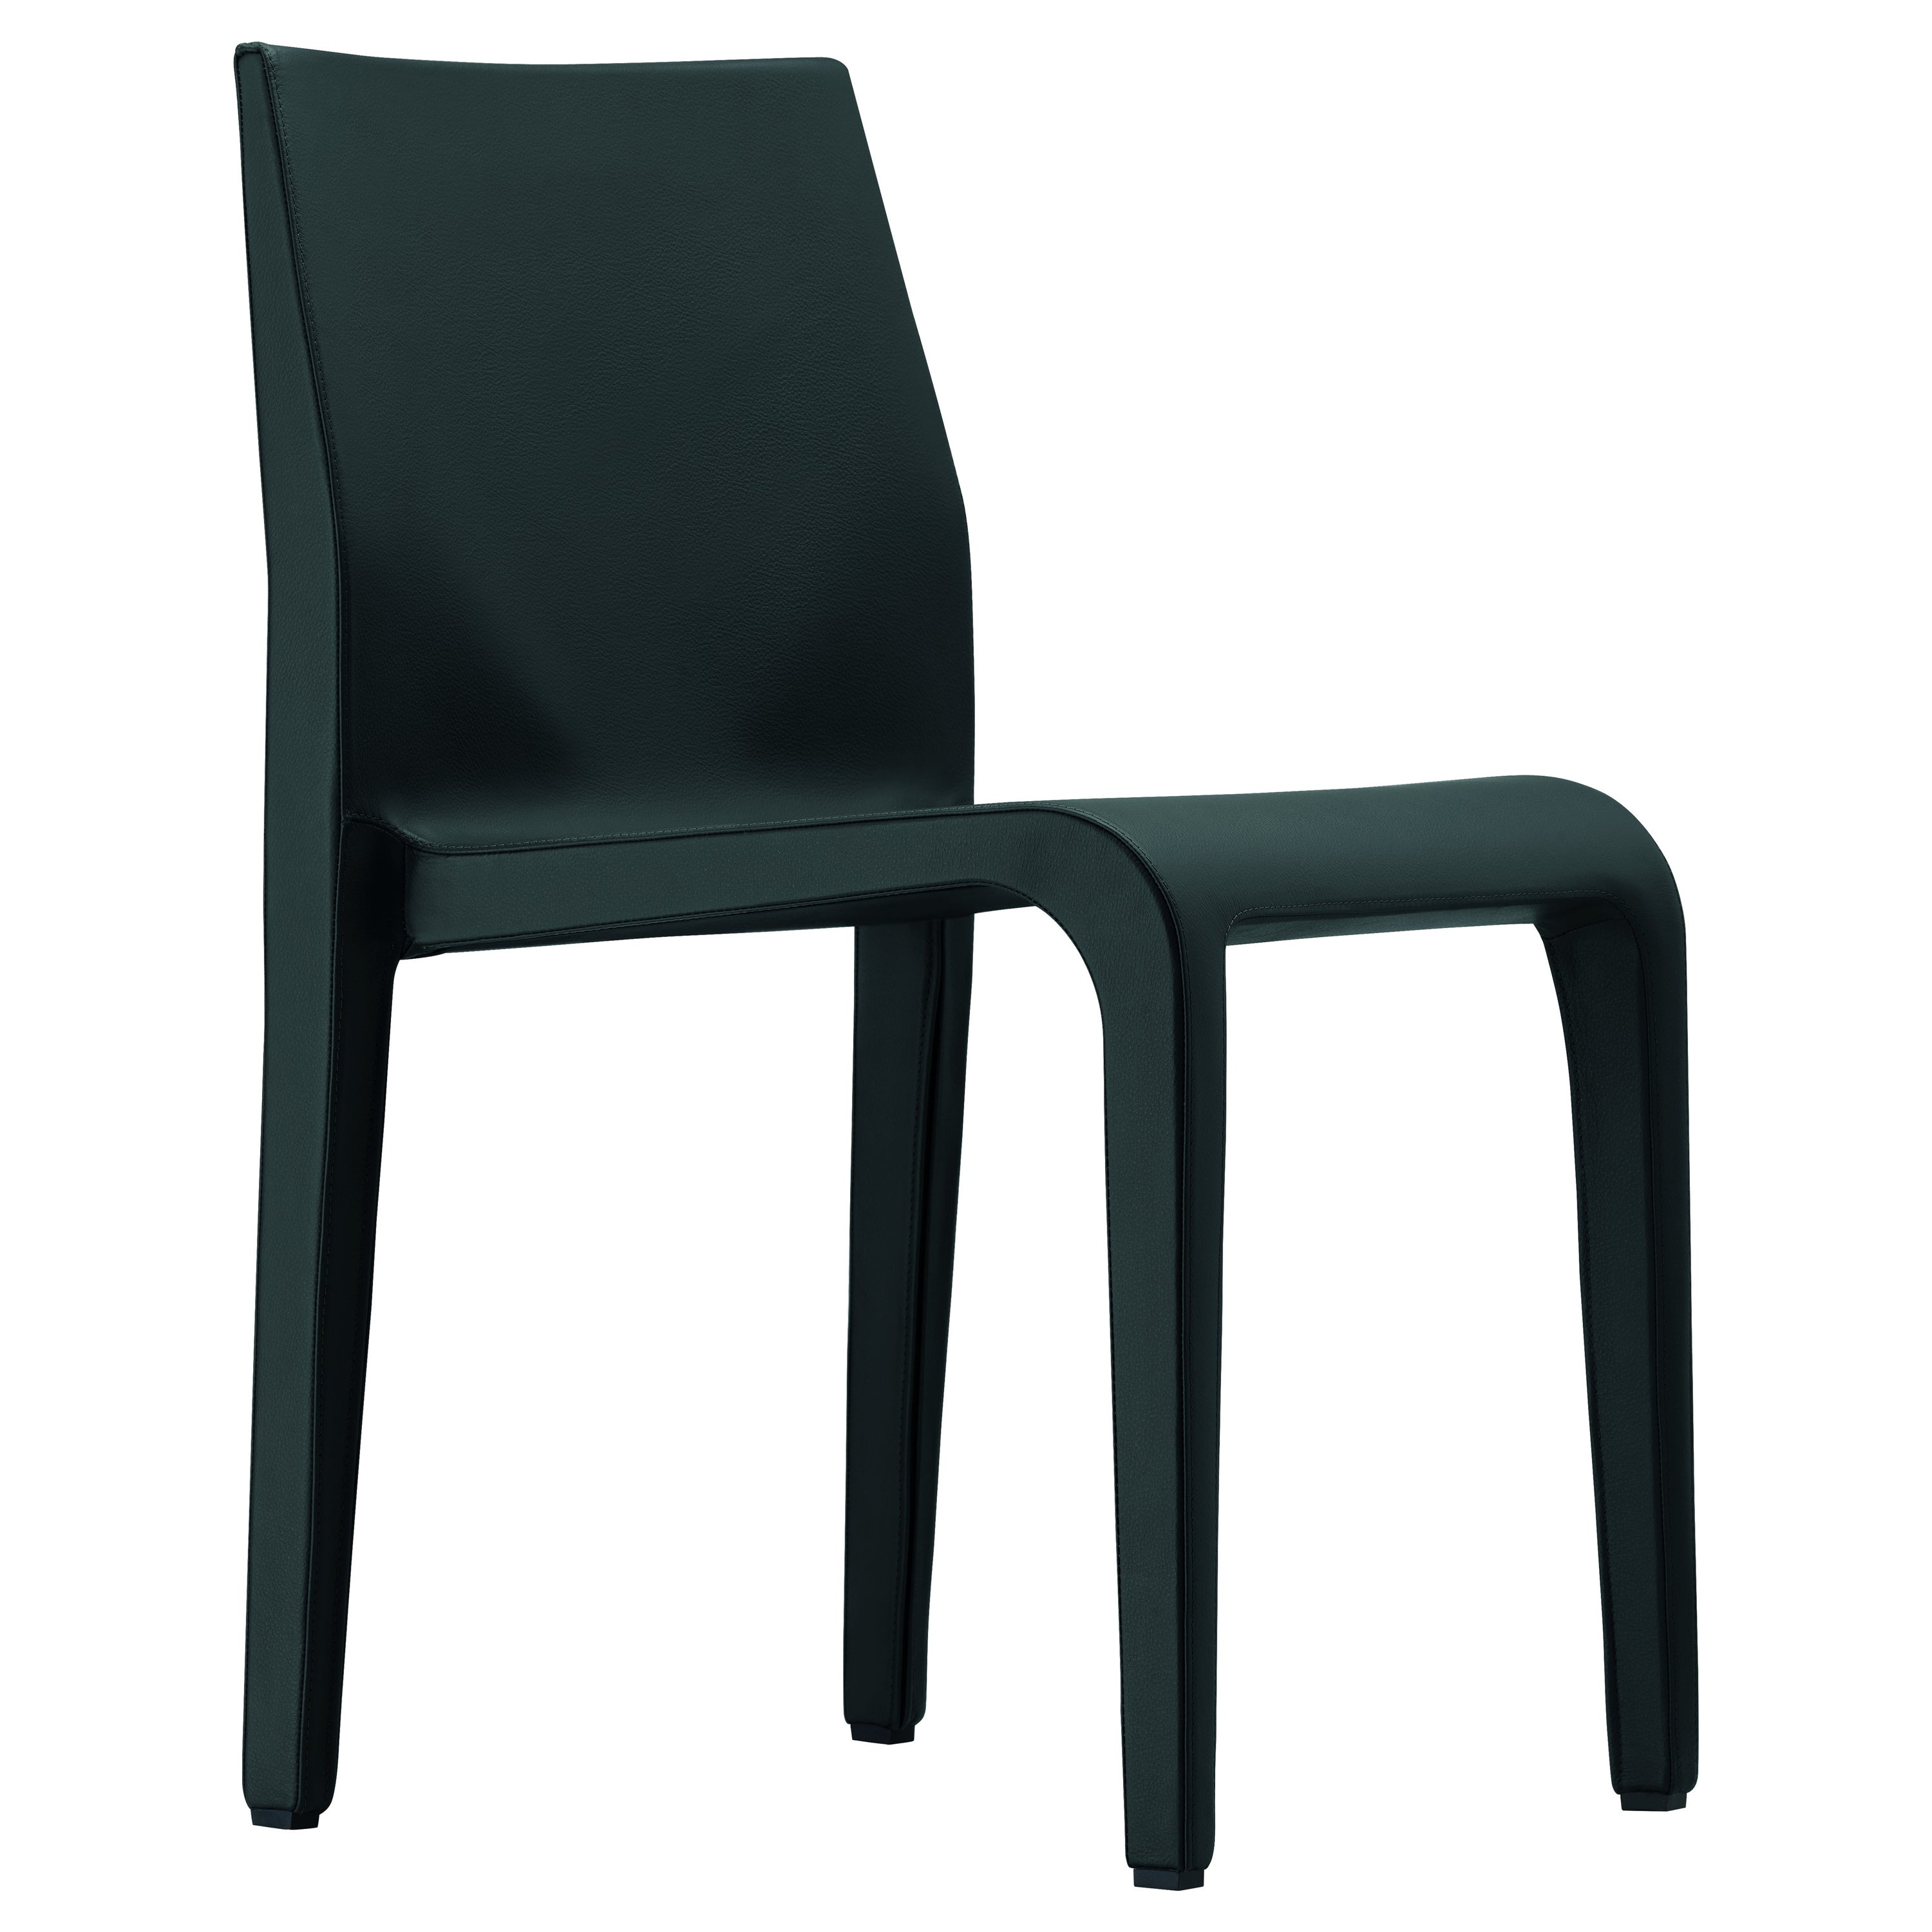 Alias 301 Laleggera Chair in Full Black Leather by Riccardo Blumer For Sale